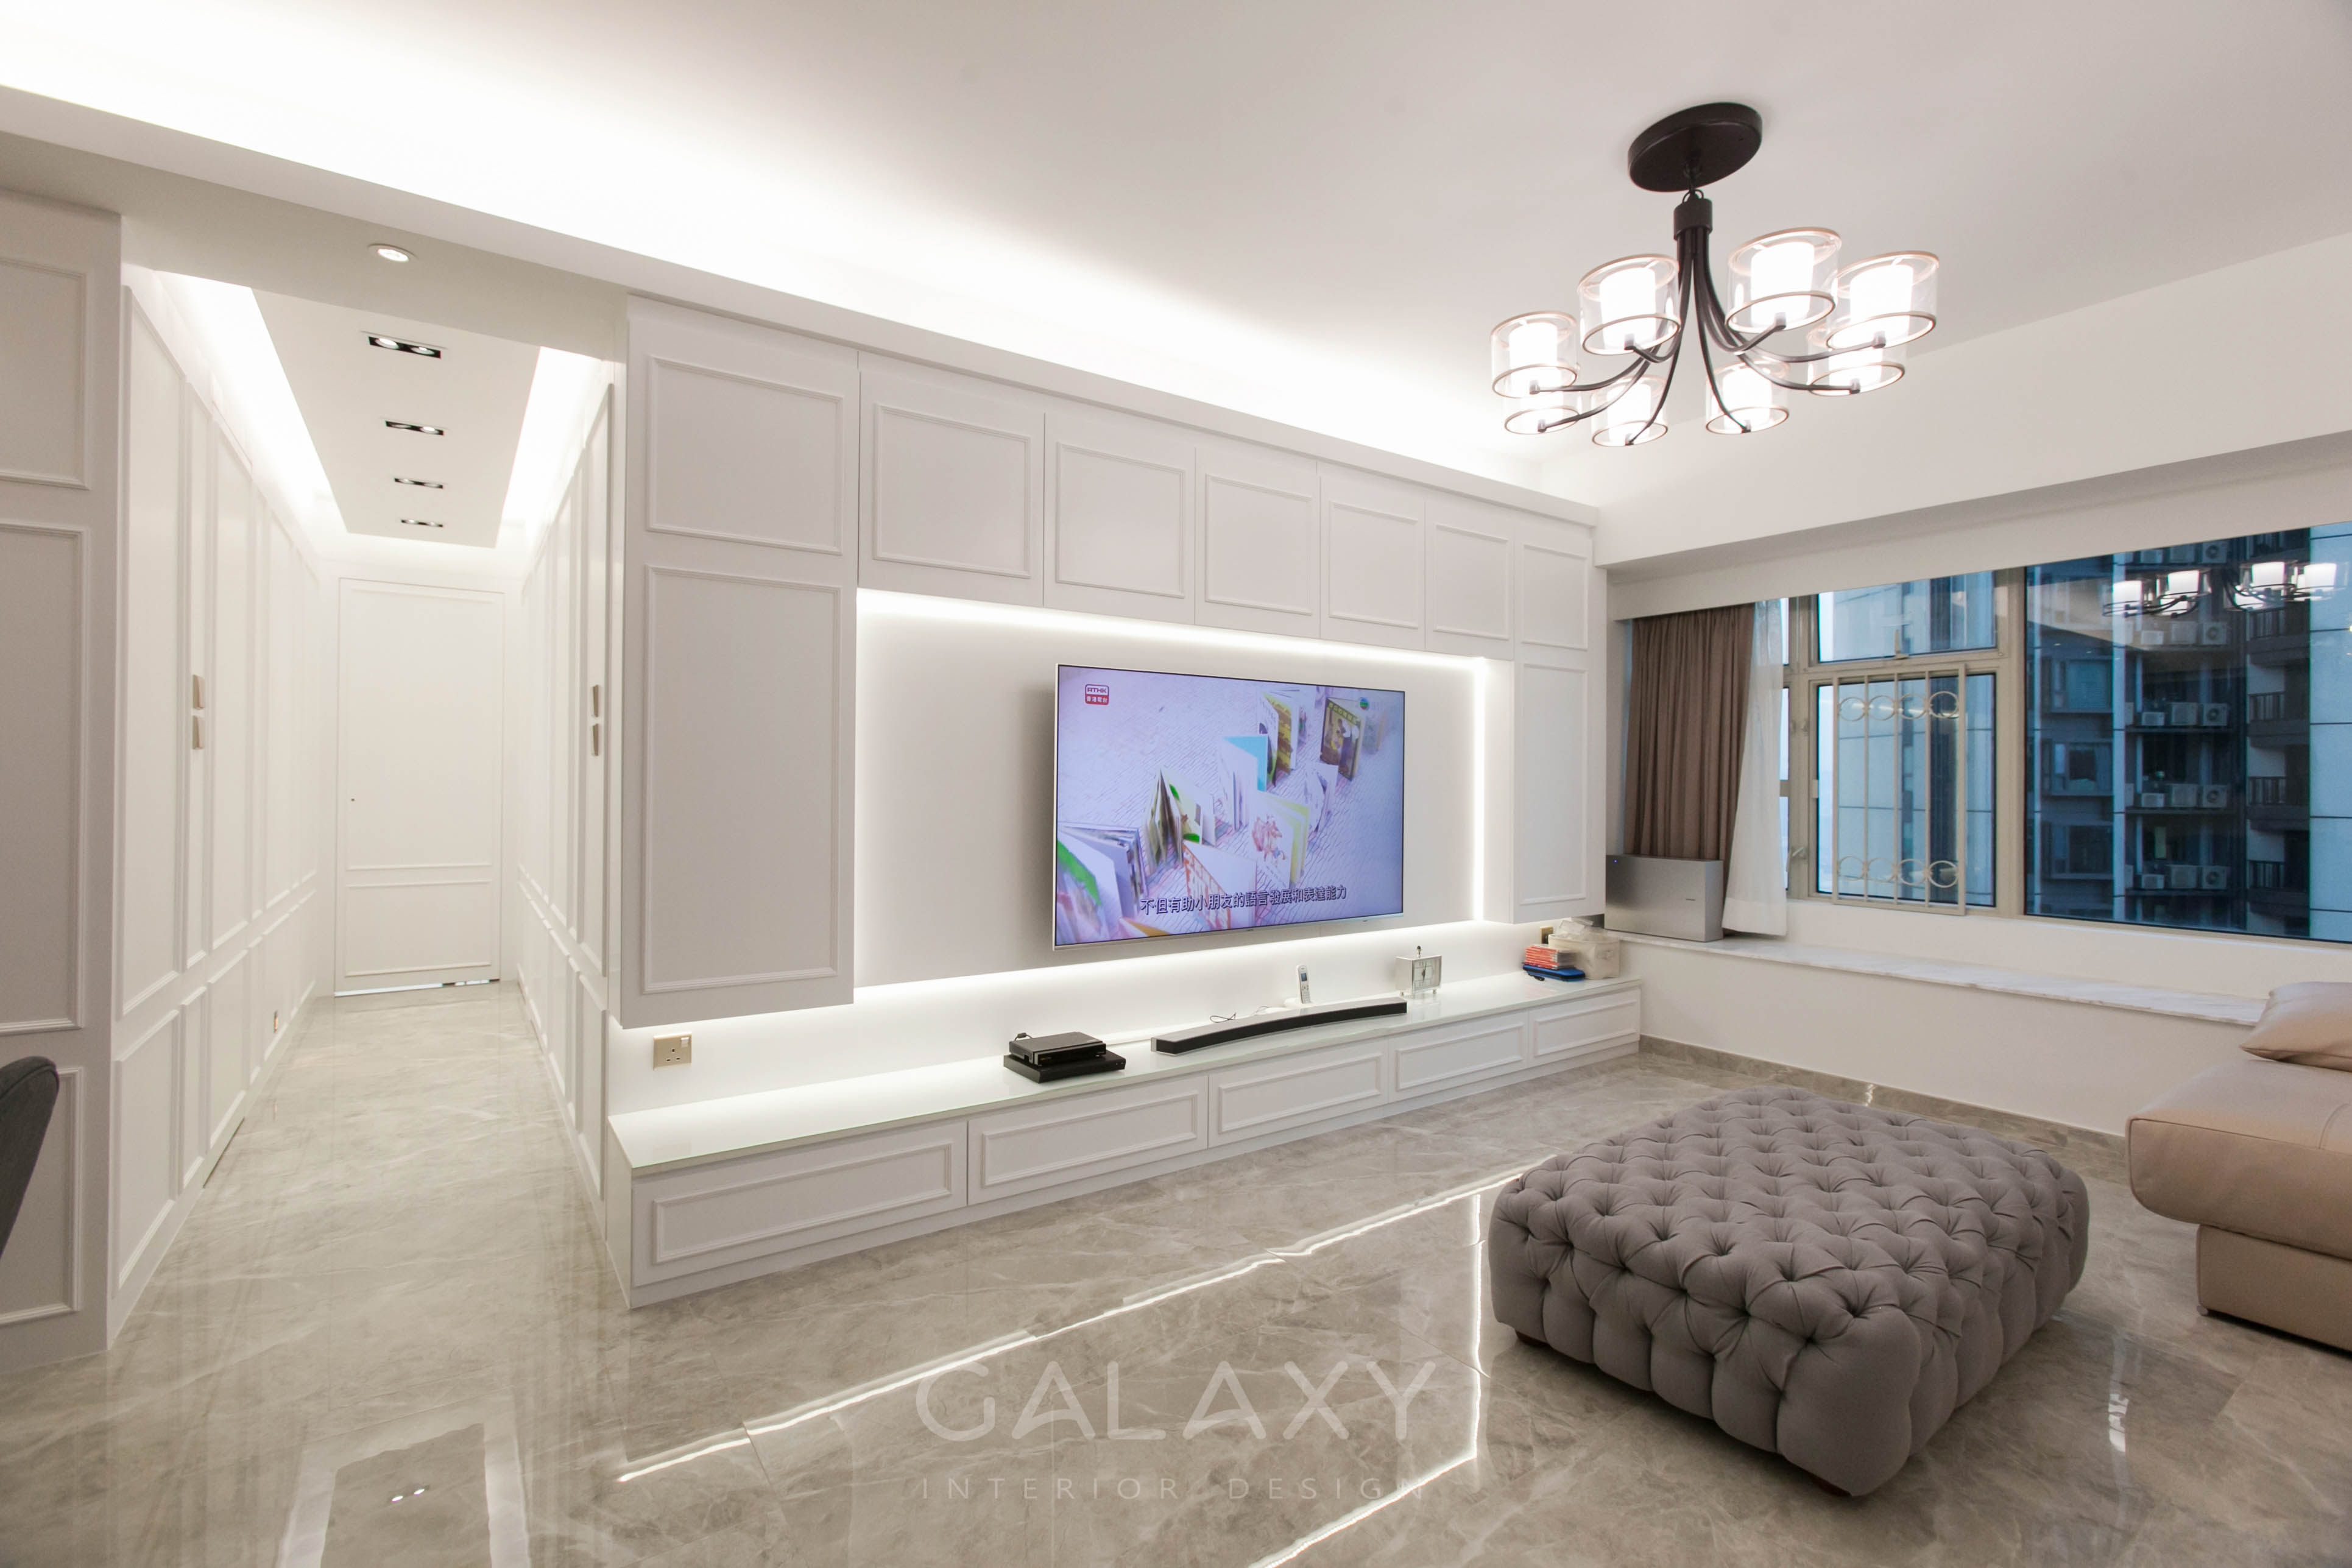 Andrew Lai - Galaxy Interior Design - Robinson Place